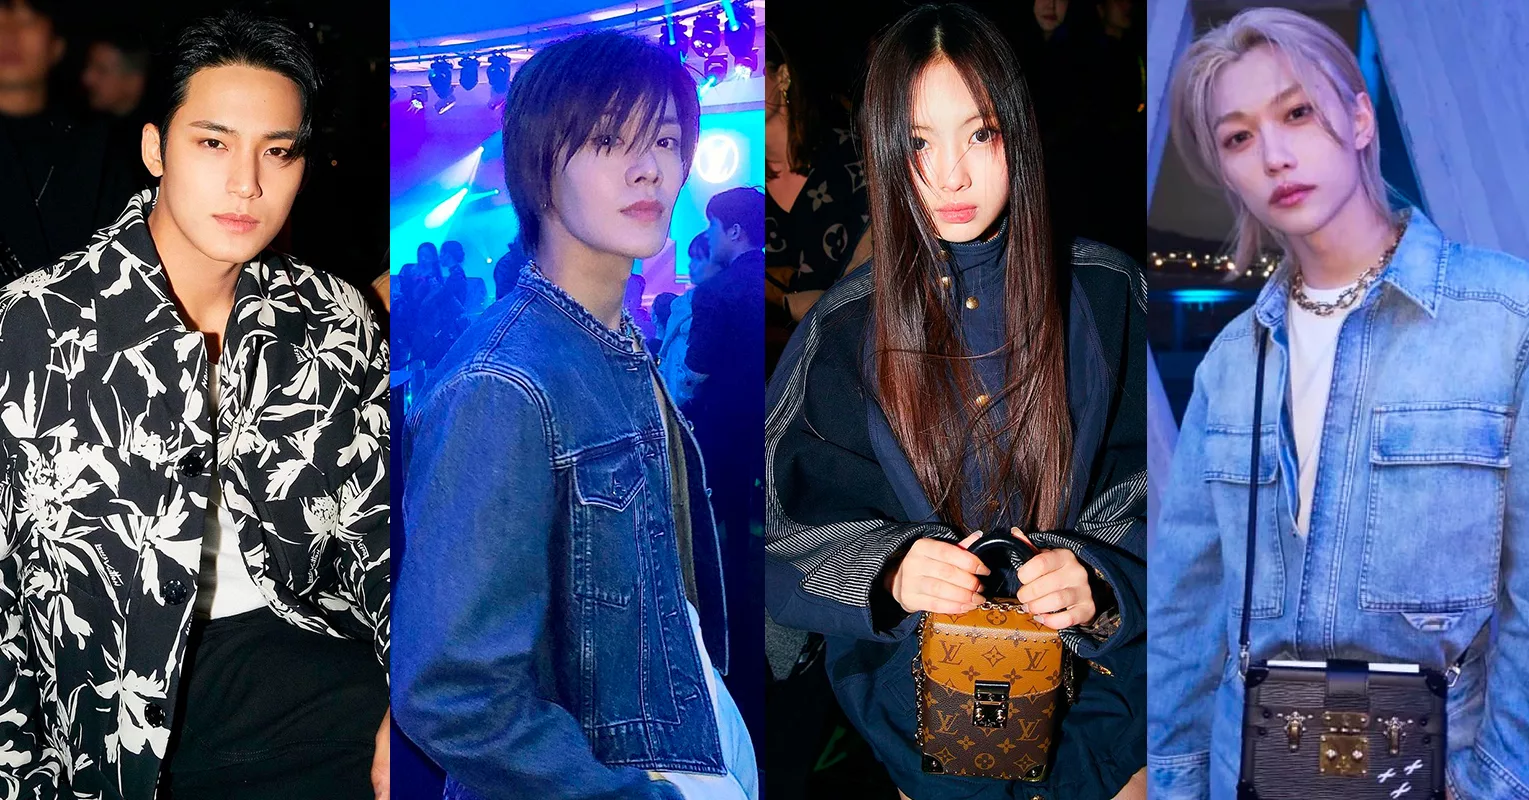 Louis Vuitton unveils photos of Bae Doo Na, Jeon So Mi, BamBam, Taeyeon,  and Jung Hoyeon